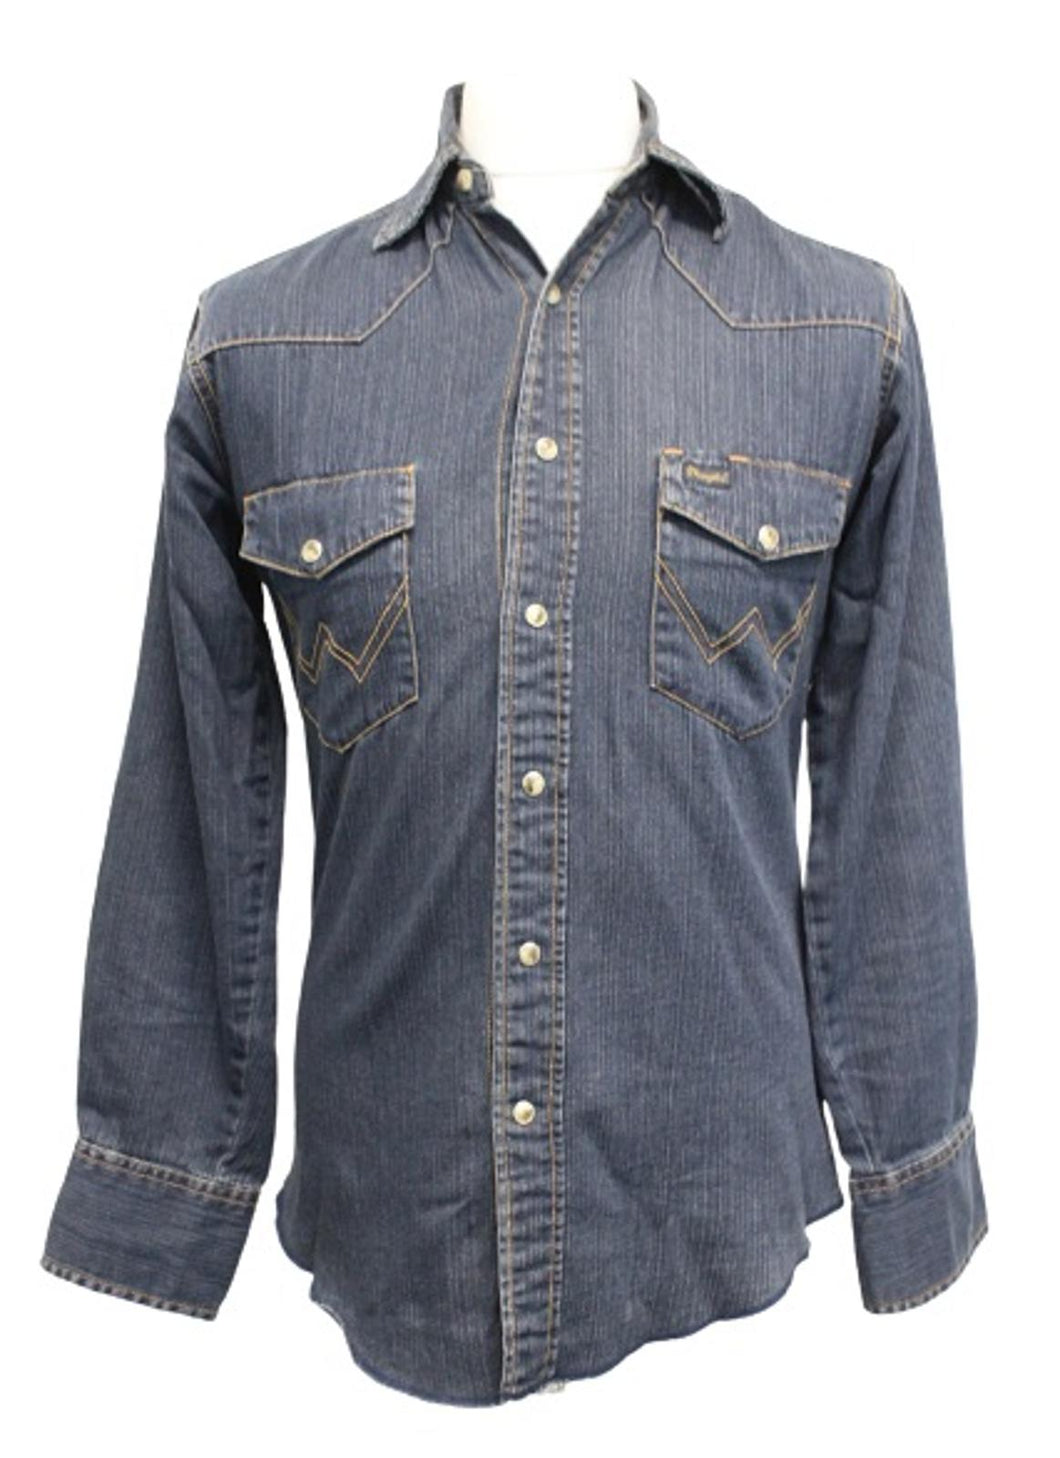 WRANGLER Men's Blue Long Sleeve Stud Button Contrast Stitch Denim Shirt S